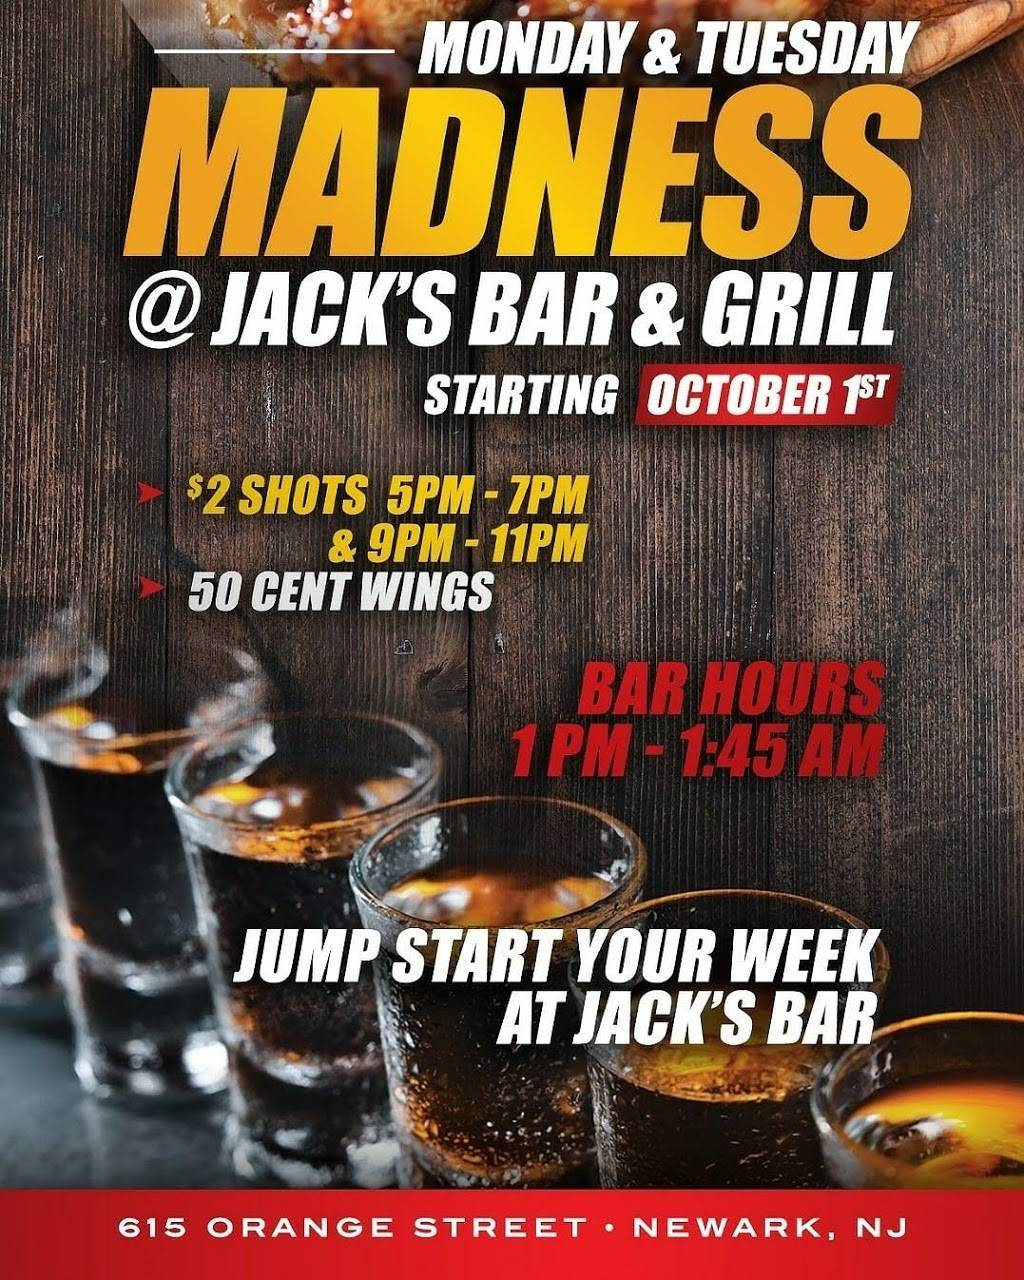 Jack's Bar 615 Orange St, Newark, NJ 07107, USA